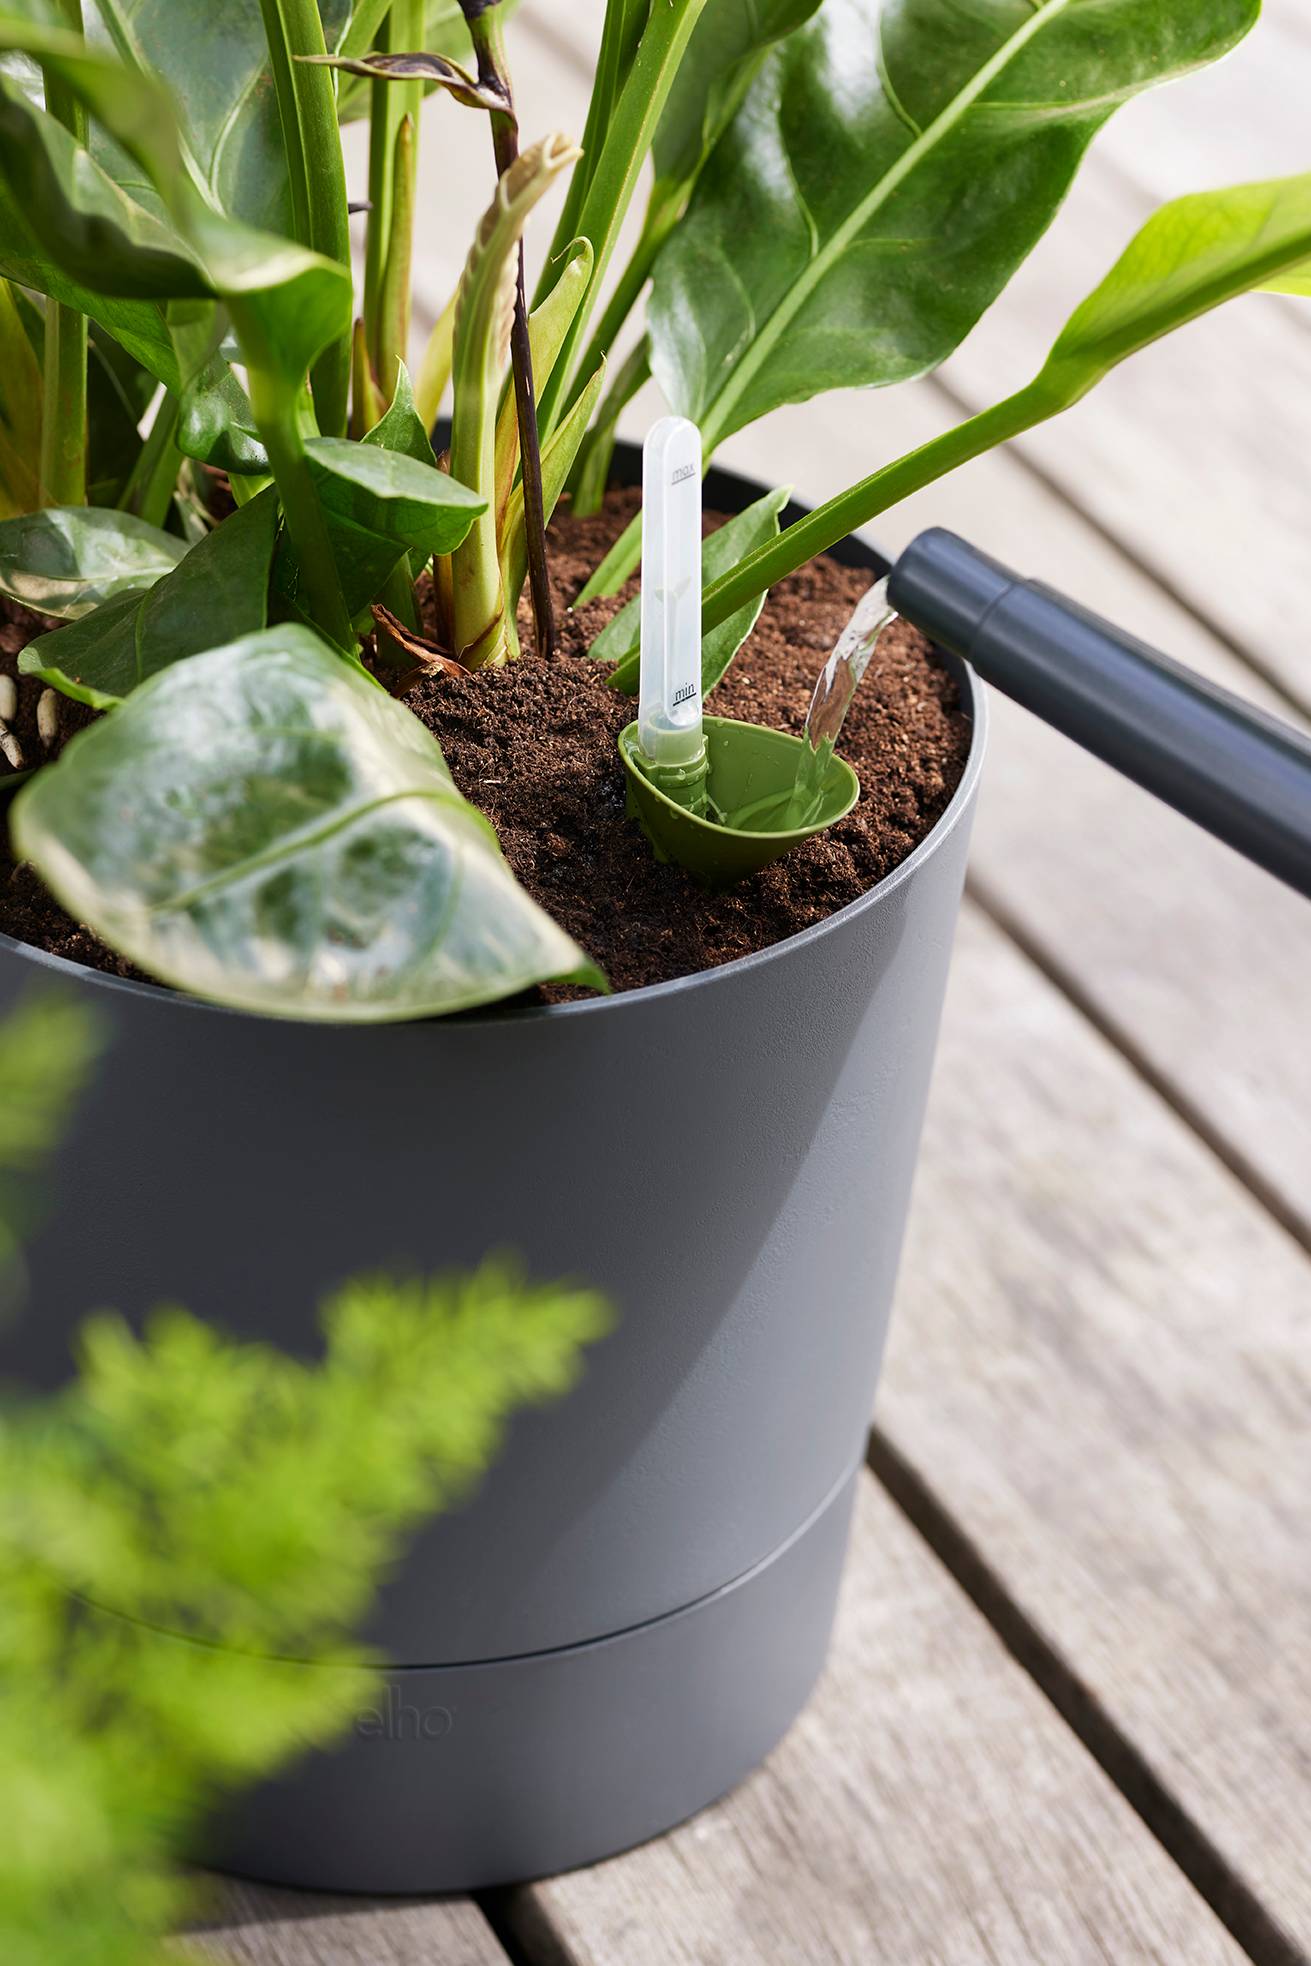 Vaso per piante rotondo Elho Greensense Ø 30 cm grigio carbone